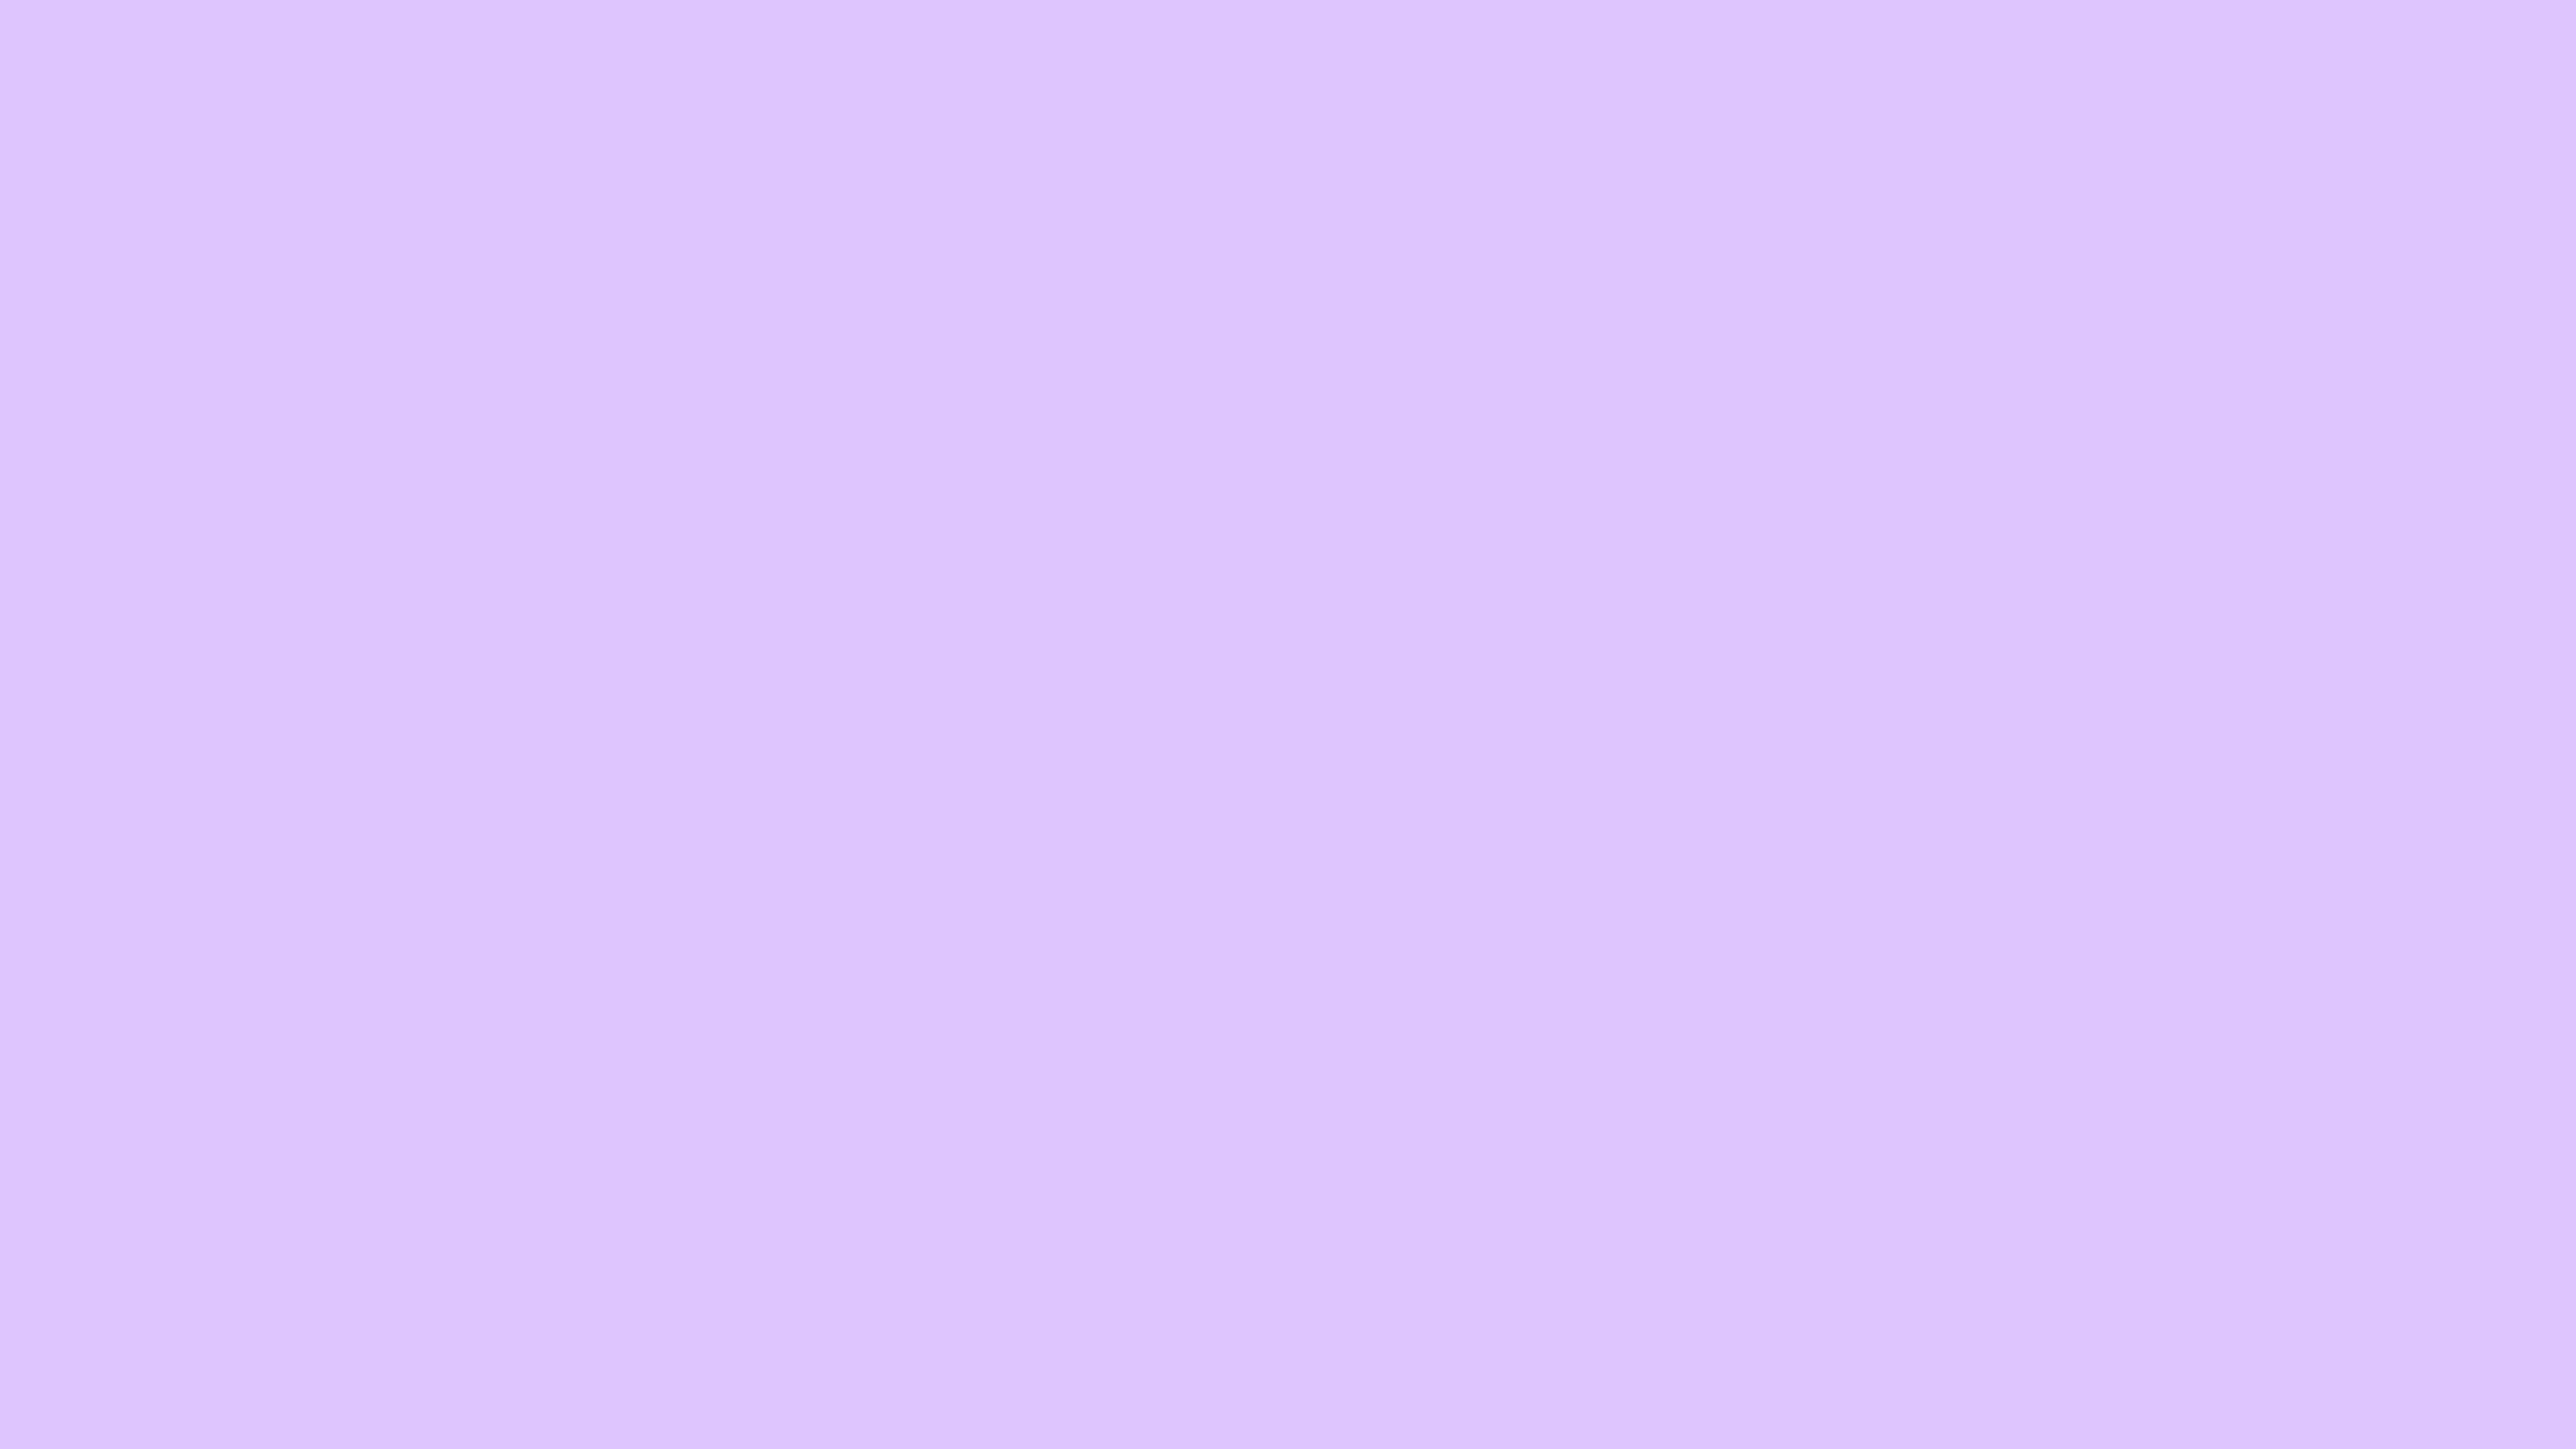 8. "Lavender" - wide 5